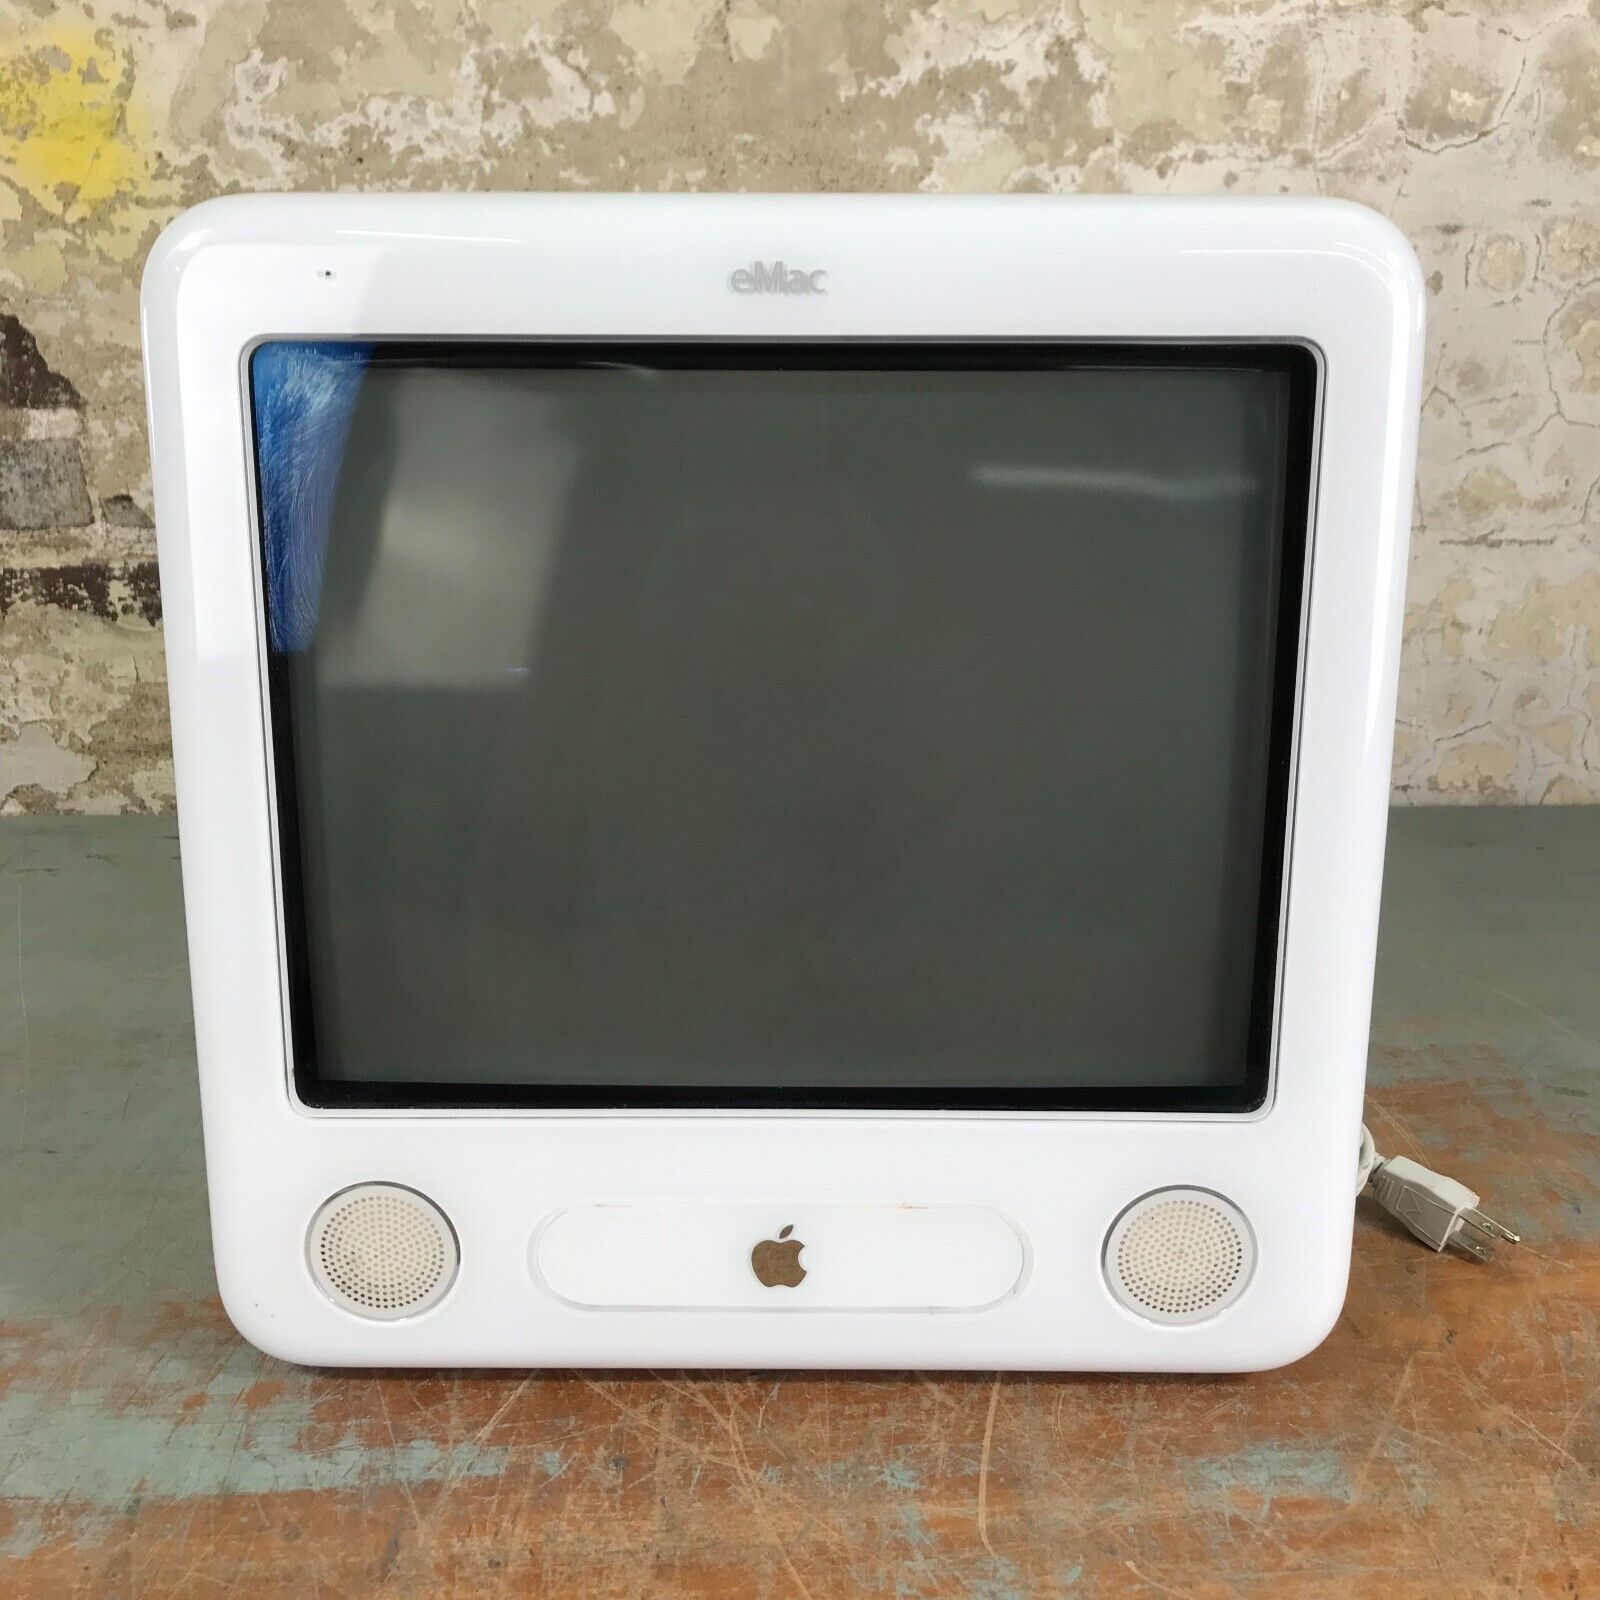 Vintage Apple eMac 17